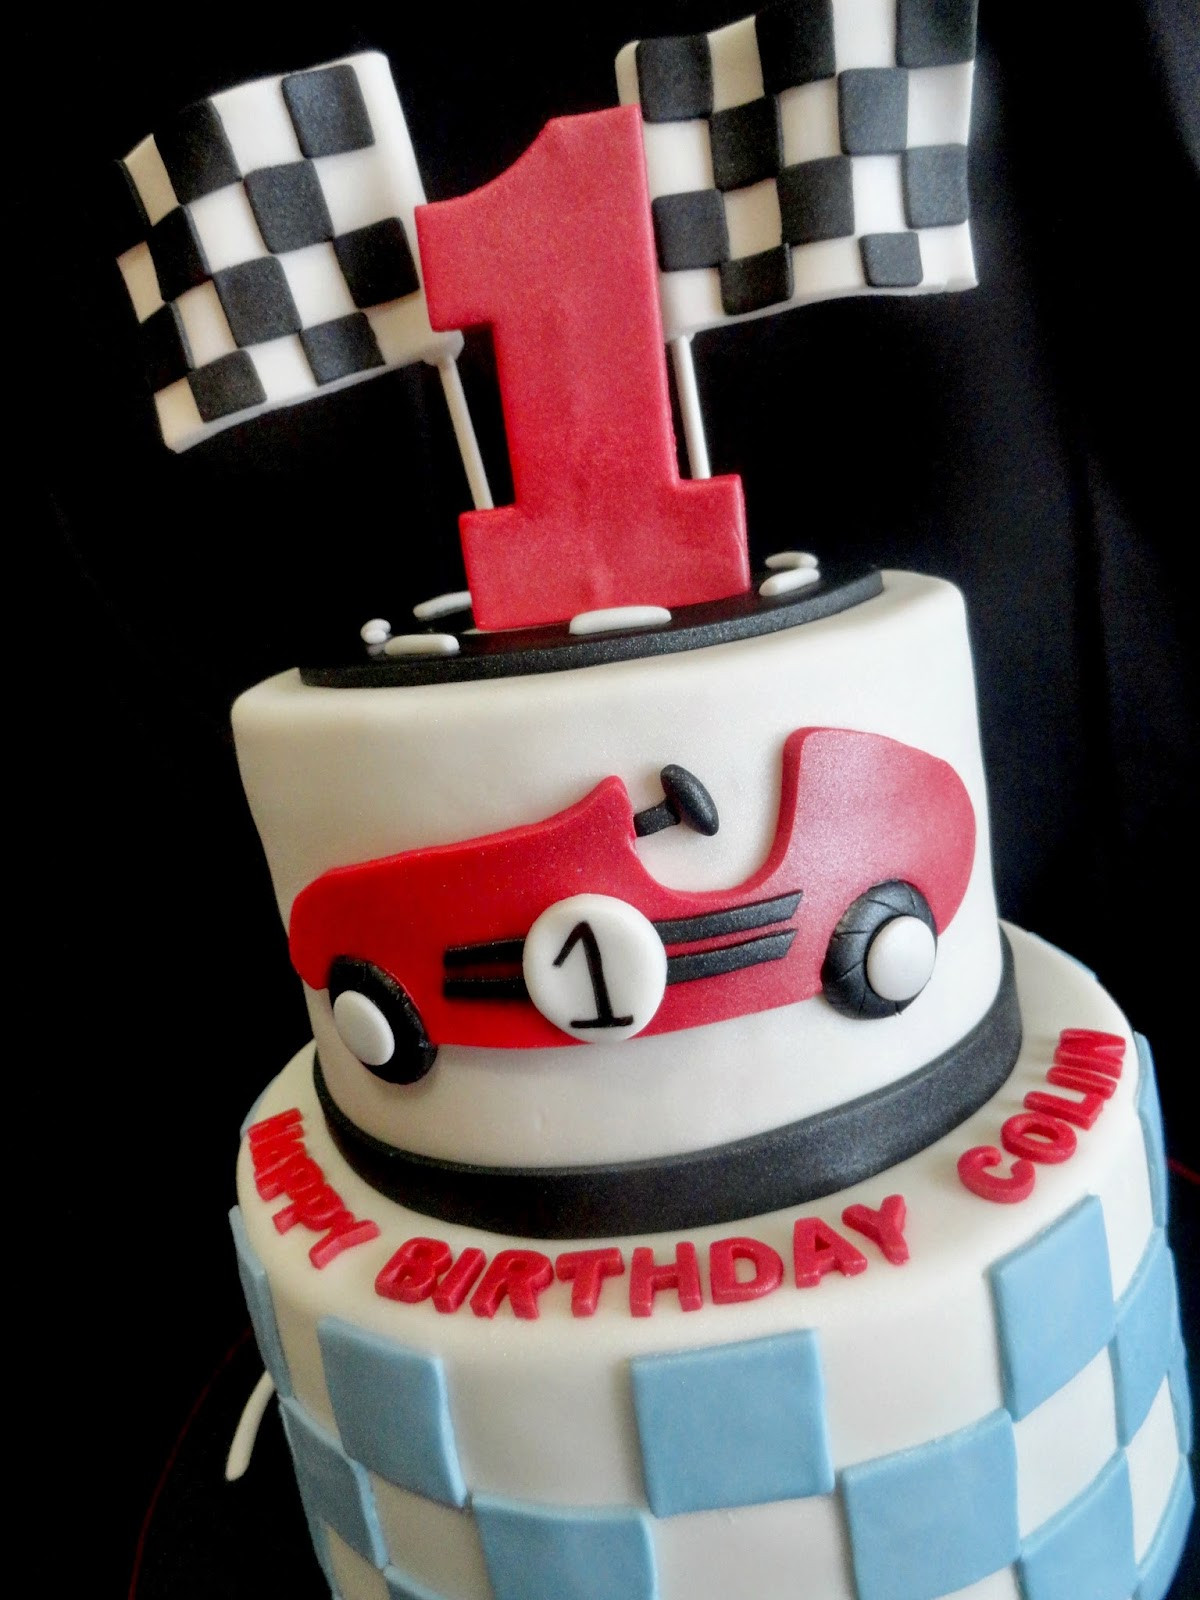 Race Car Birthday Cake
 Pink Little Cake Race Car Theme 1st Birthday Cake